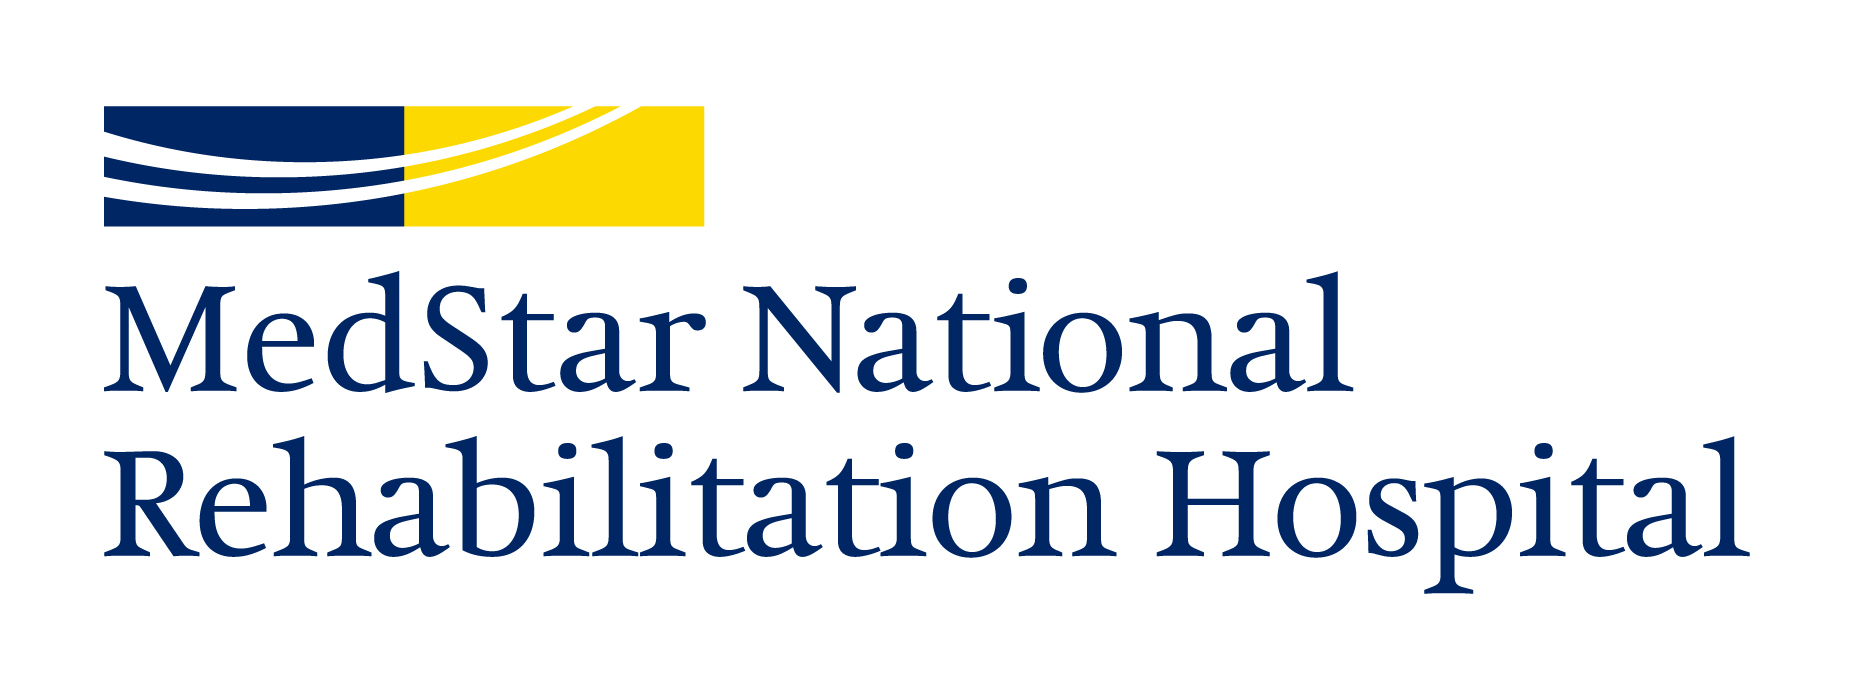 MedStar National Rehabilitation Hospital